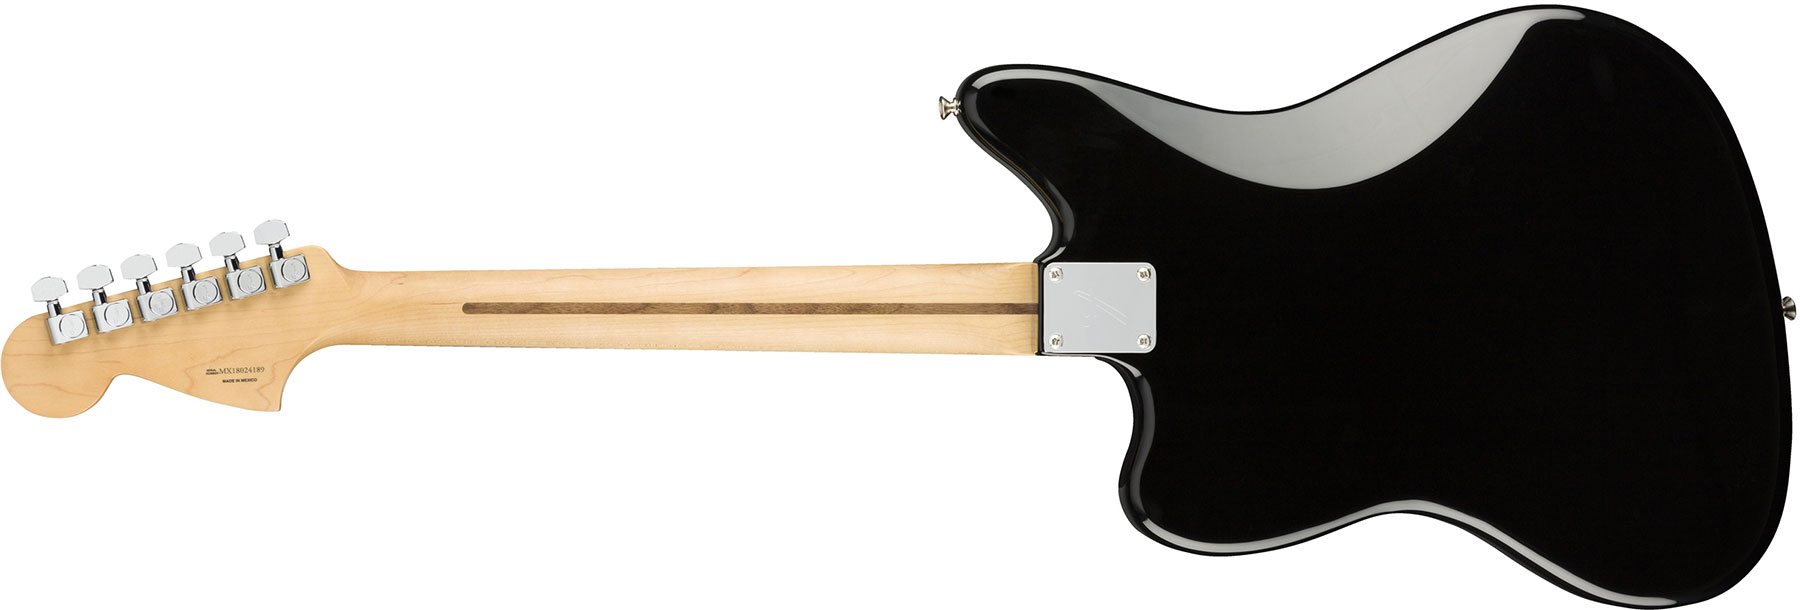 Fender Jaguar Player Mex Hs Pf - Black - Retro rock electric guitar - Variation 1